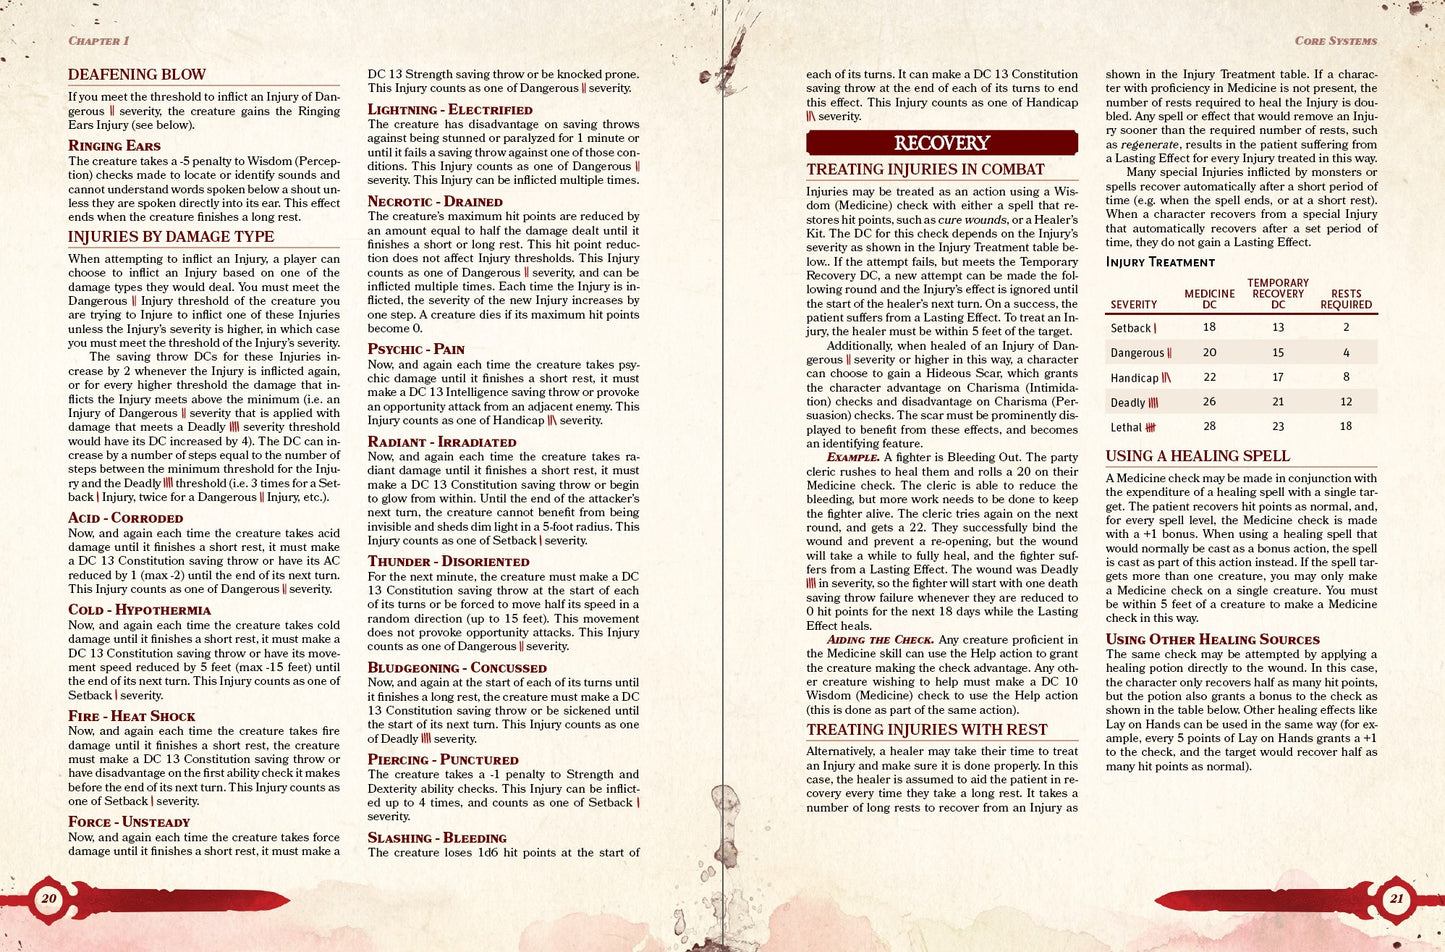 Injuries & Vile Deeds (5e) - Hardcover & PDF